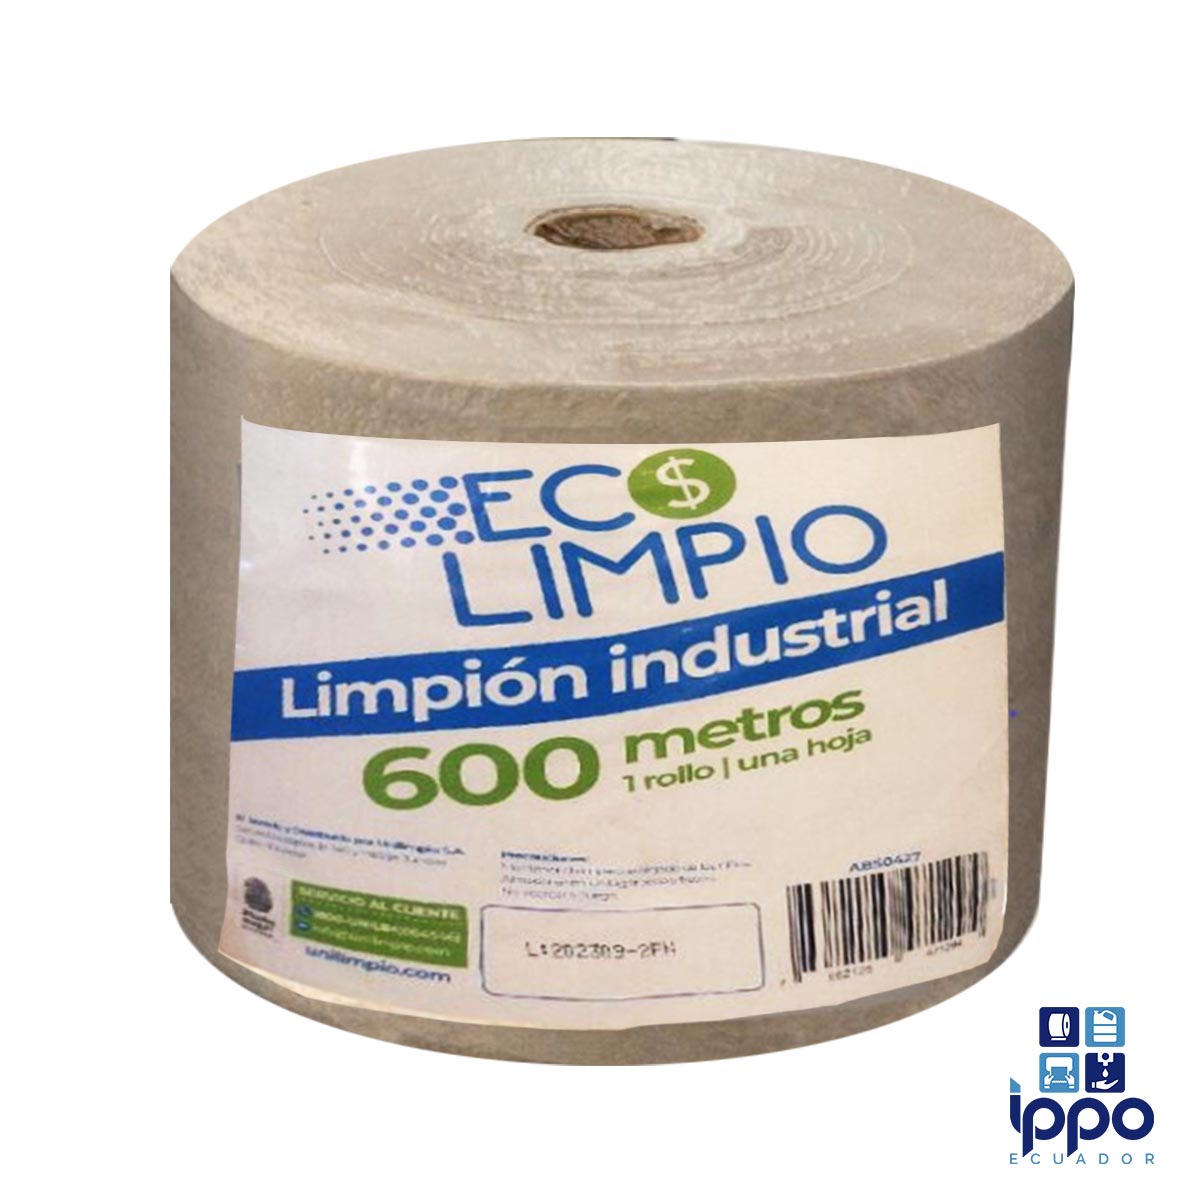 limpion-industrial-cafe-natural-600-metros-economico-ecolimpio-ippo-ecuador-distribuidor-limpieza-profesional-quito